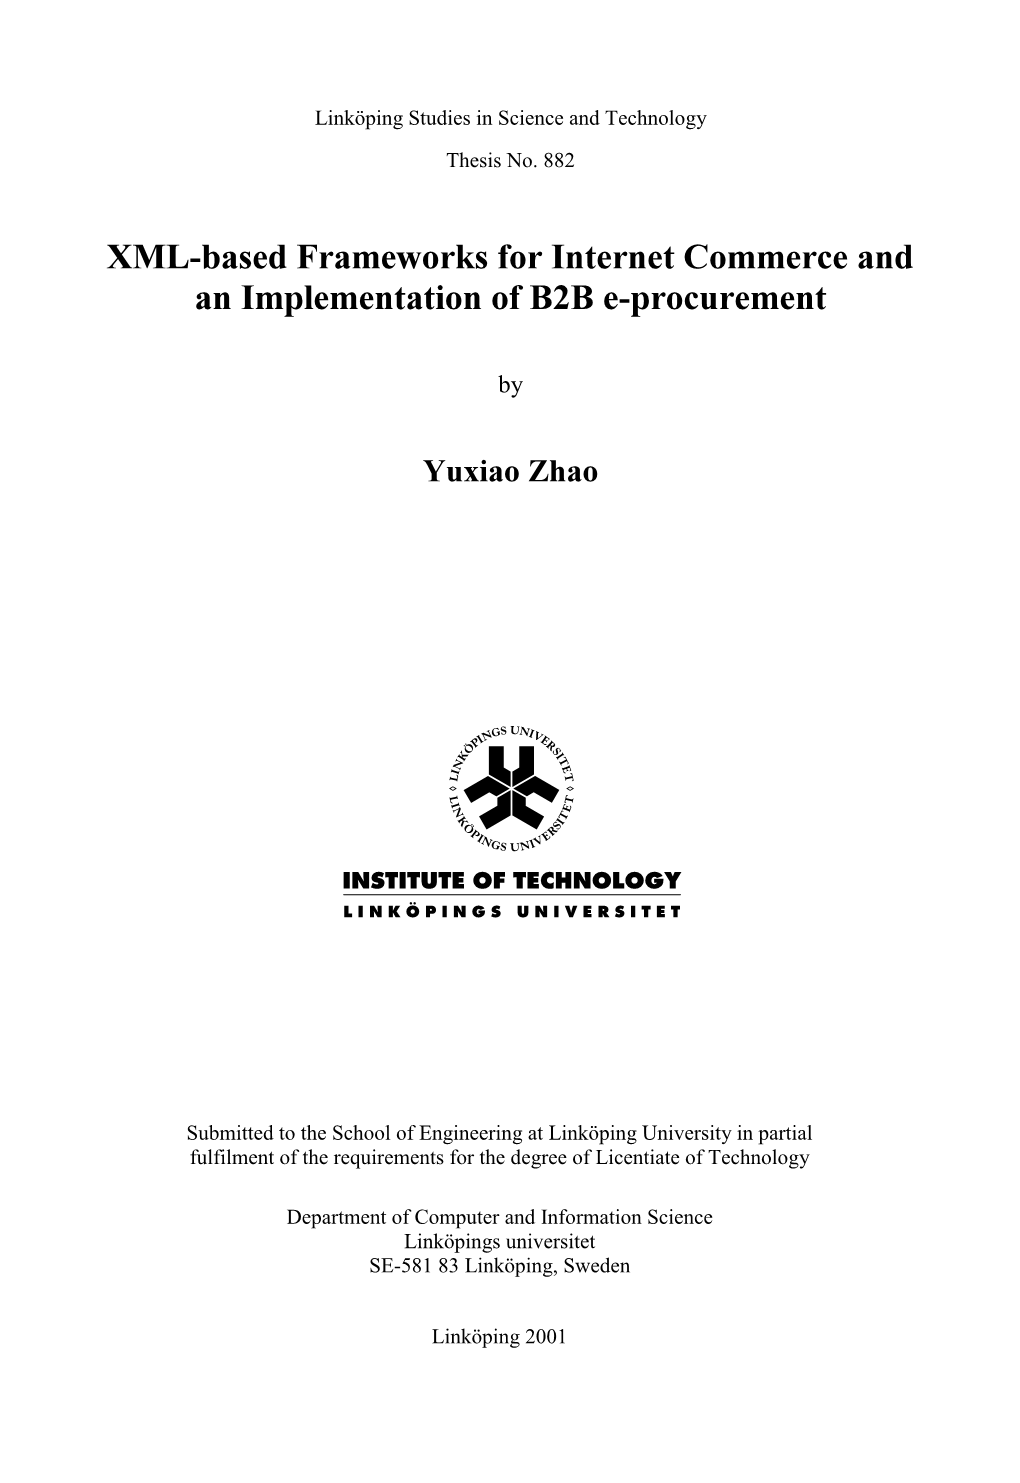 XML Based Frameworks for Internet Commerce and an Implementation